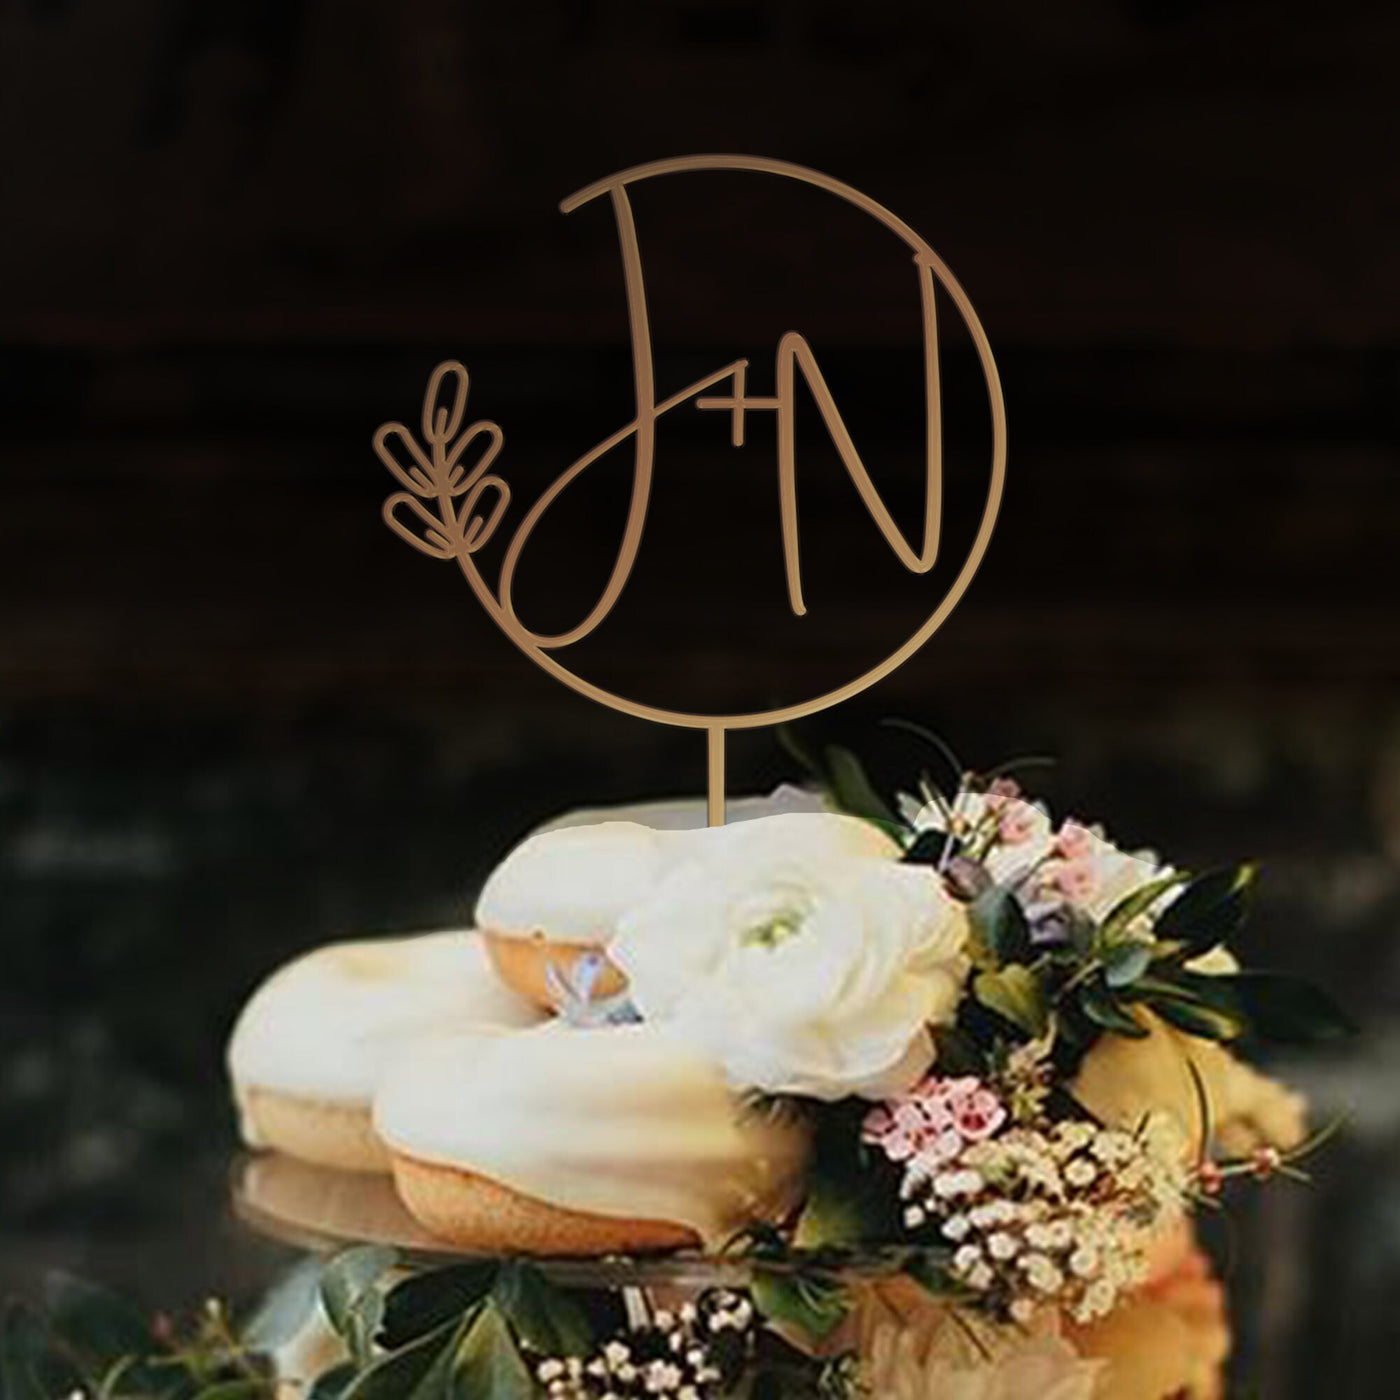 Gold monogram Wedding cake topper, Wreath Initial cake topper for Rustic wedding decor, Custom cake topper bride and groom